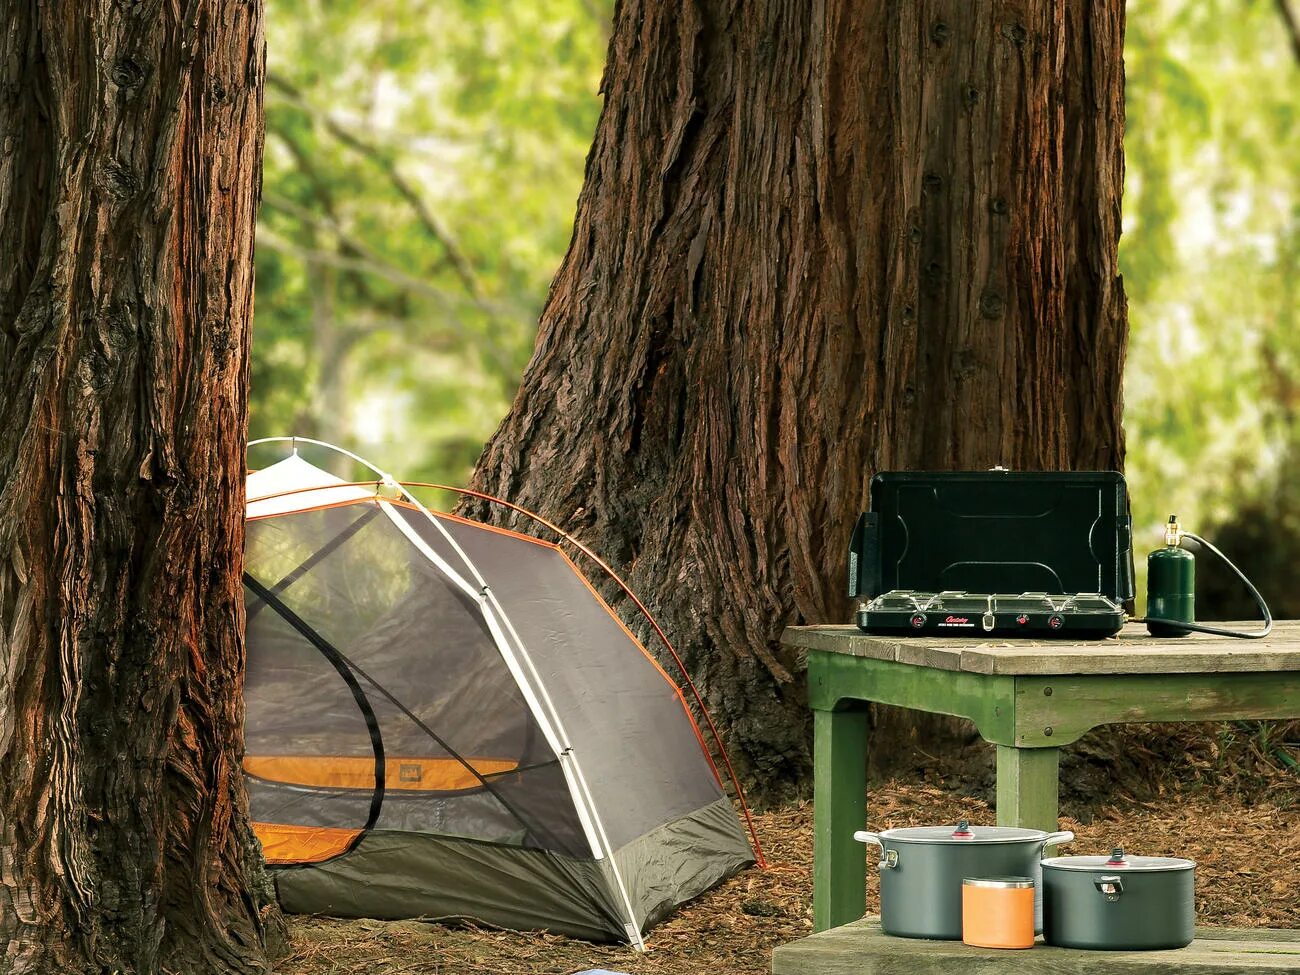 Camping is fun. Бушкрафт лагерь в лесу. Палатка field & Stream 1871. Целых 30 гаджетов для кемпинга.